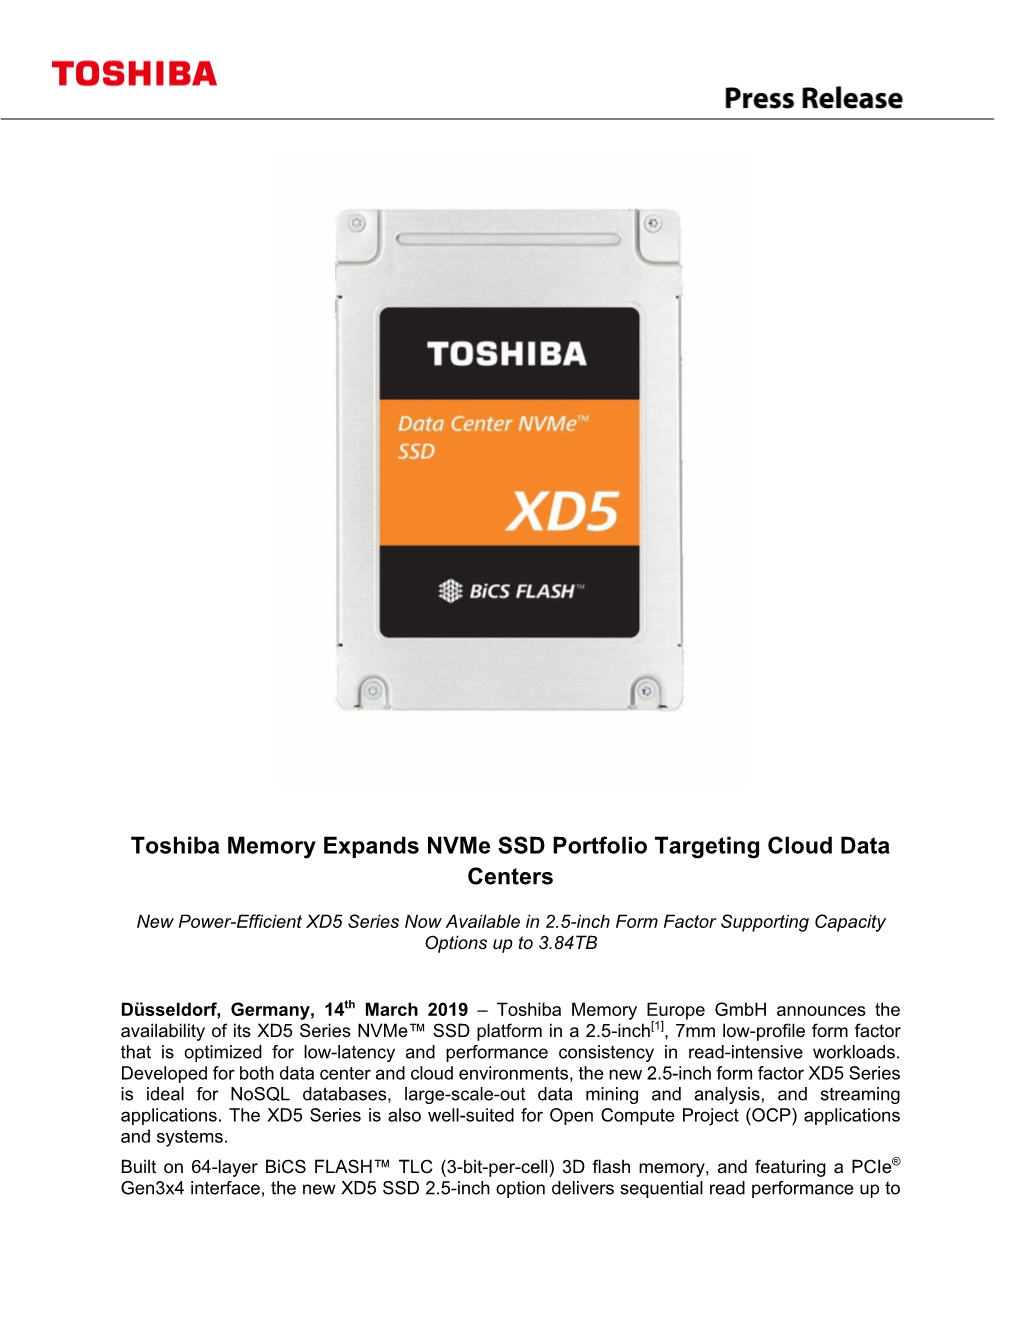 Toshiba Memory Expands Nvme SSD Portfolio Targeting Cloud Data Centers